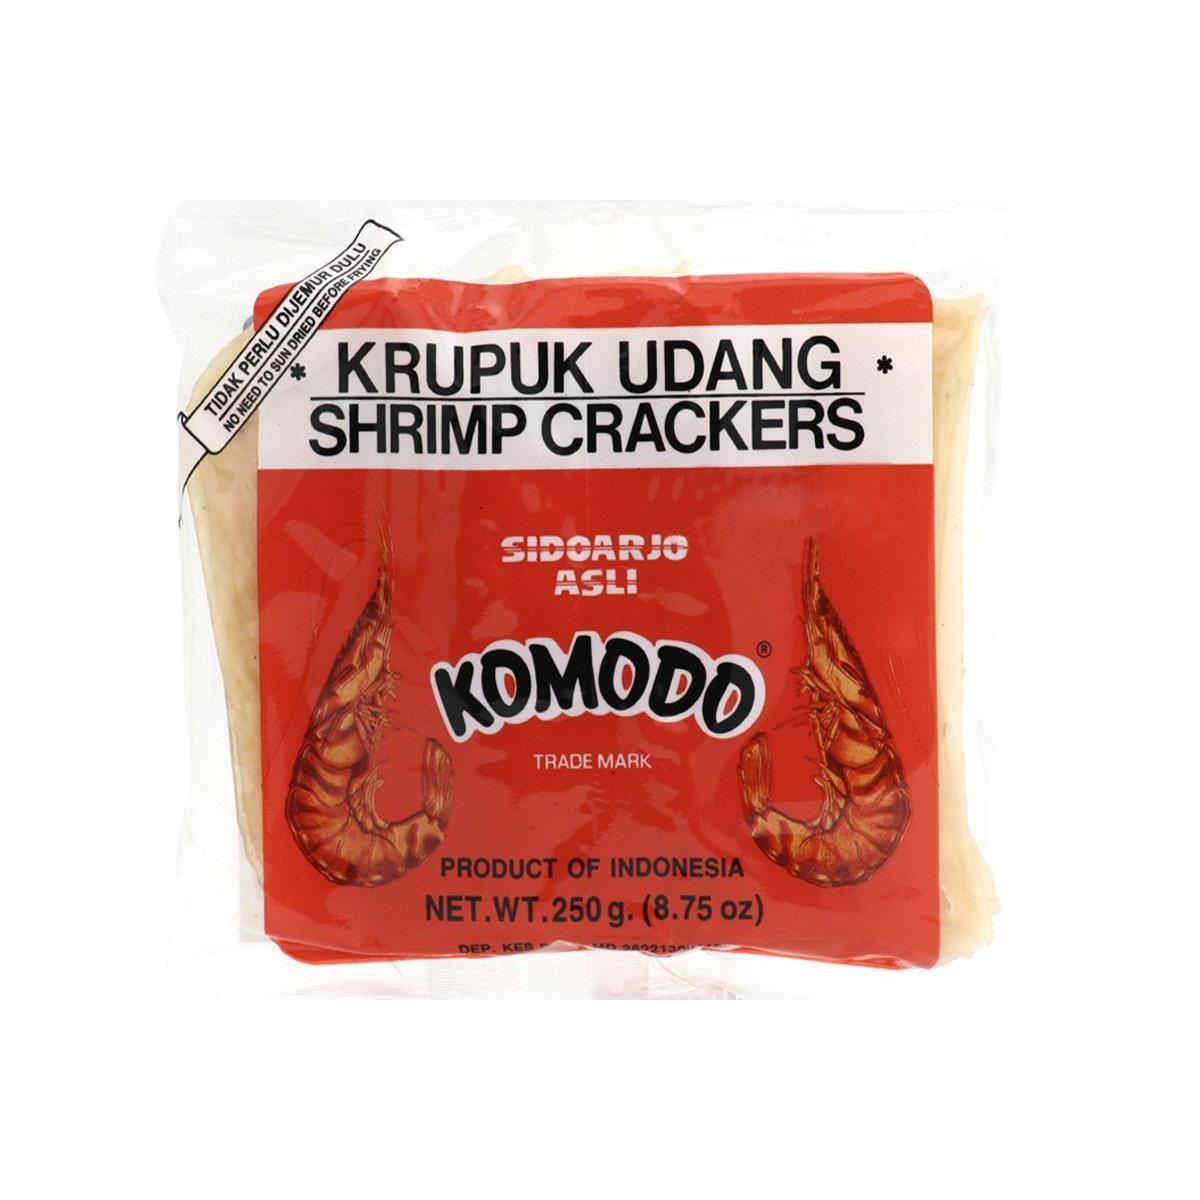 Komodo Krupuk Udang (Shrimp Crackers Large Disks Not Yet Fried) - Komodo Kroepoek Ongebakken Grote Schijven 8 Oz -227gm (Pack of 2)